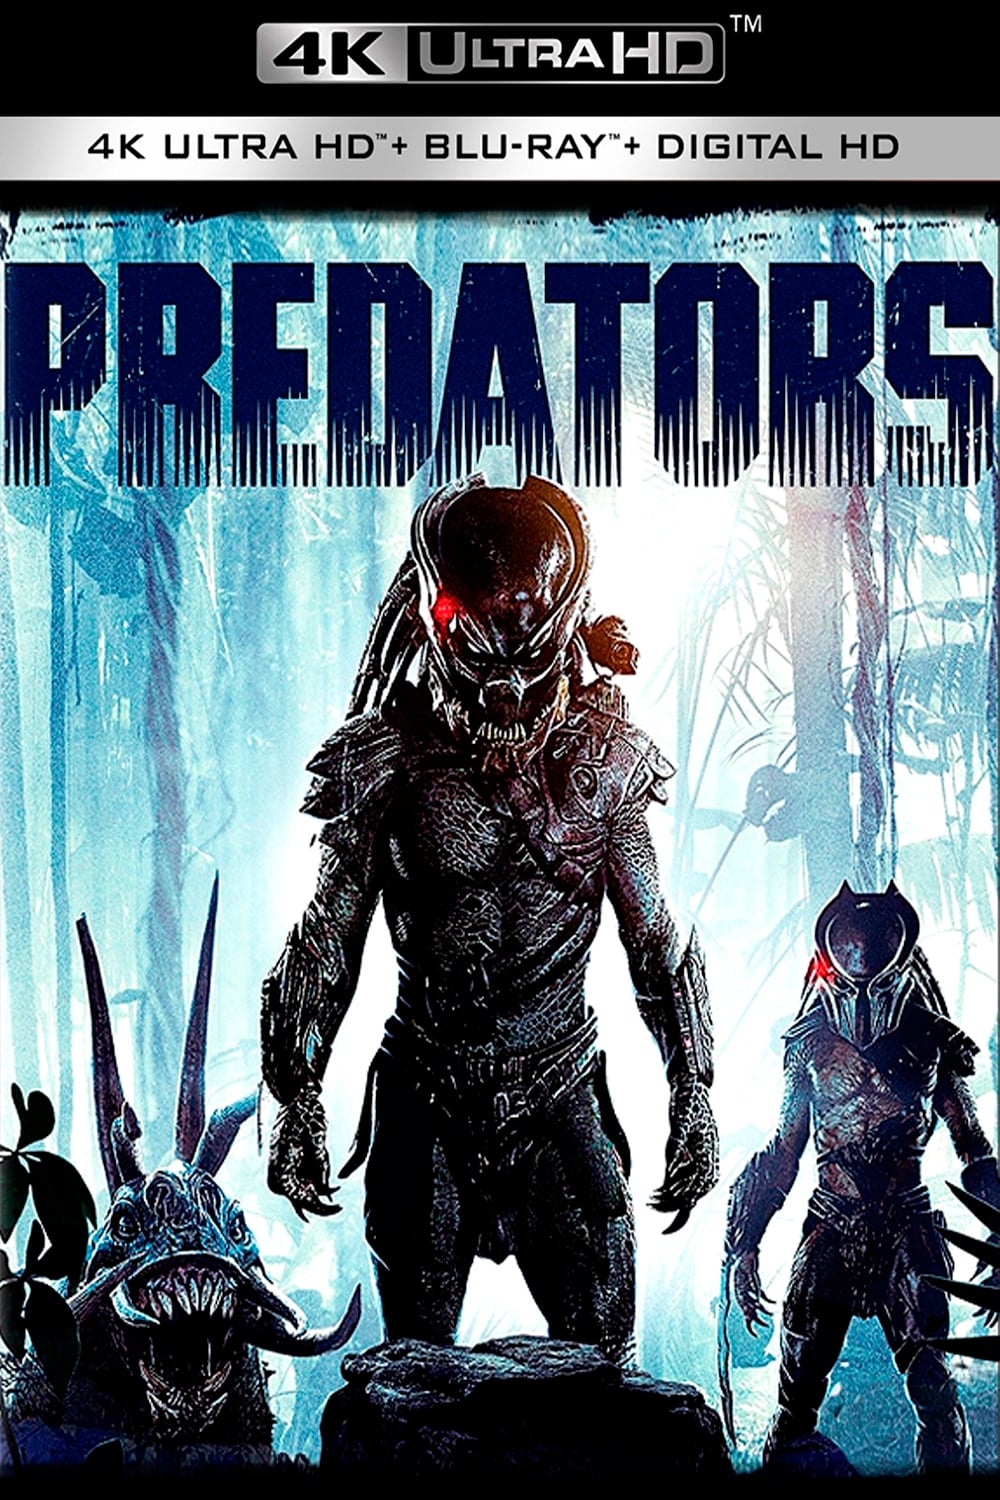 2010 Predators